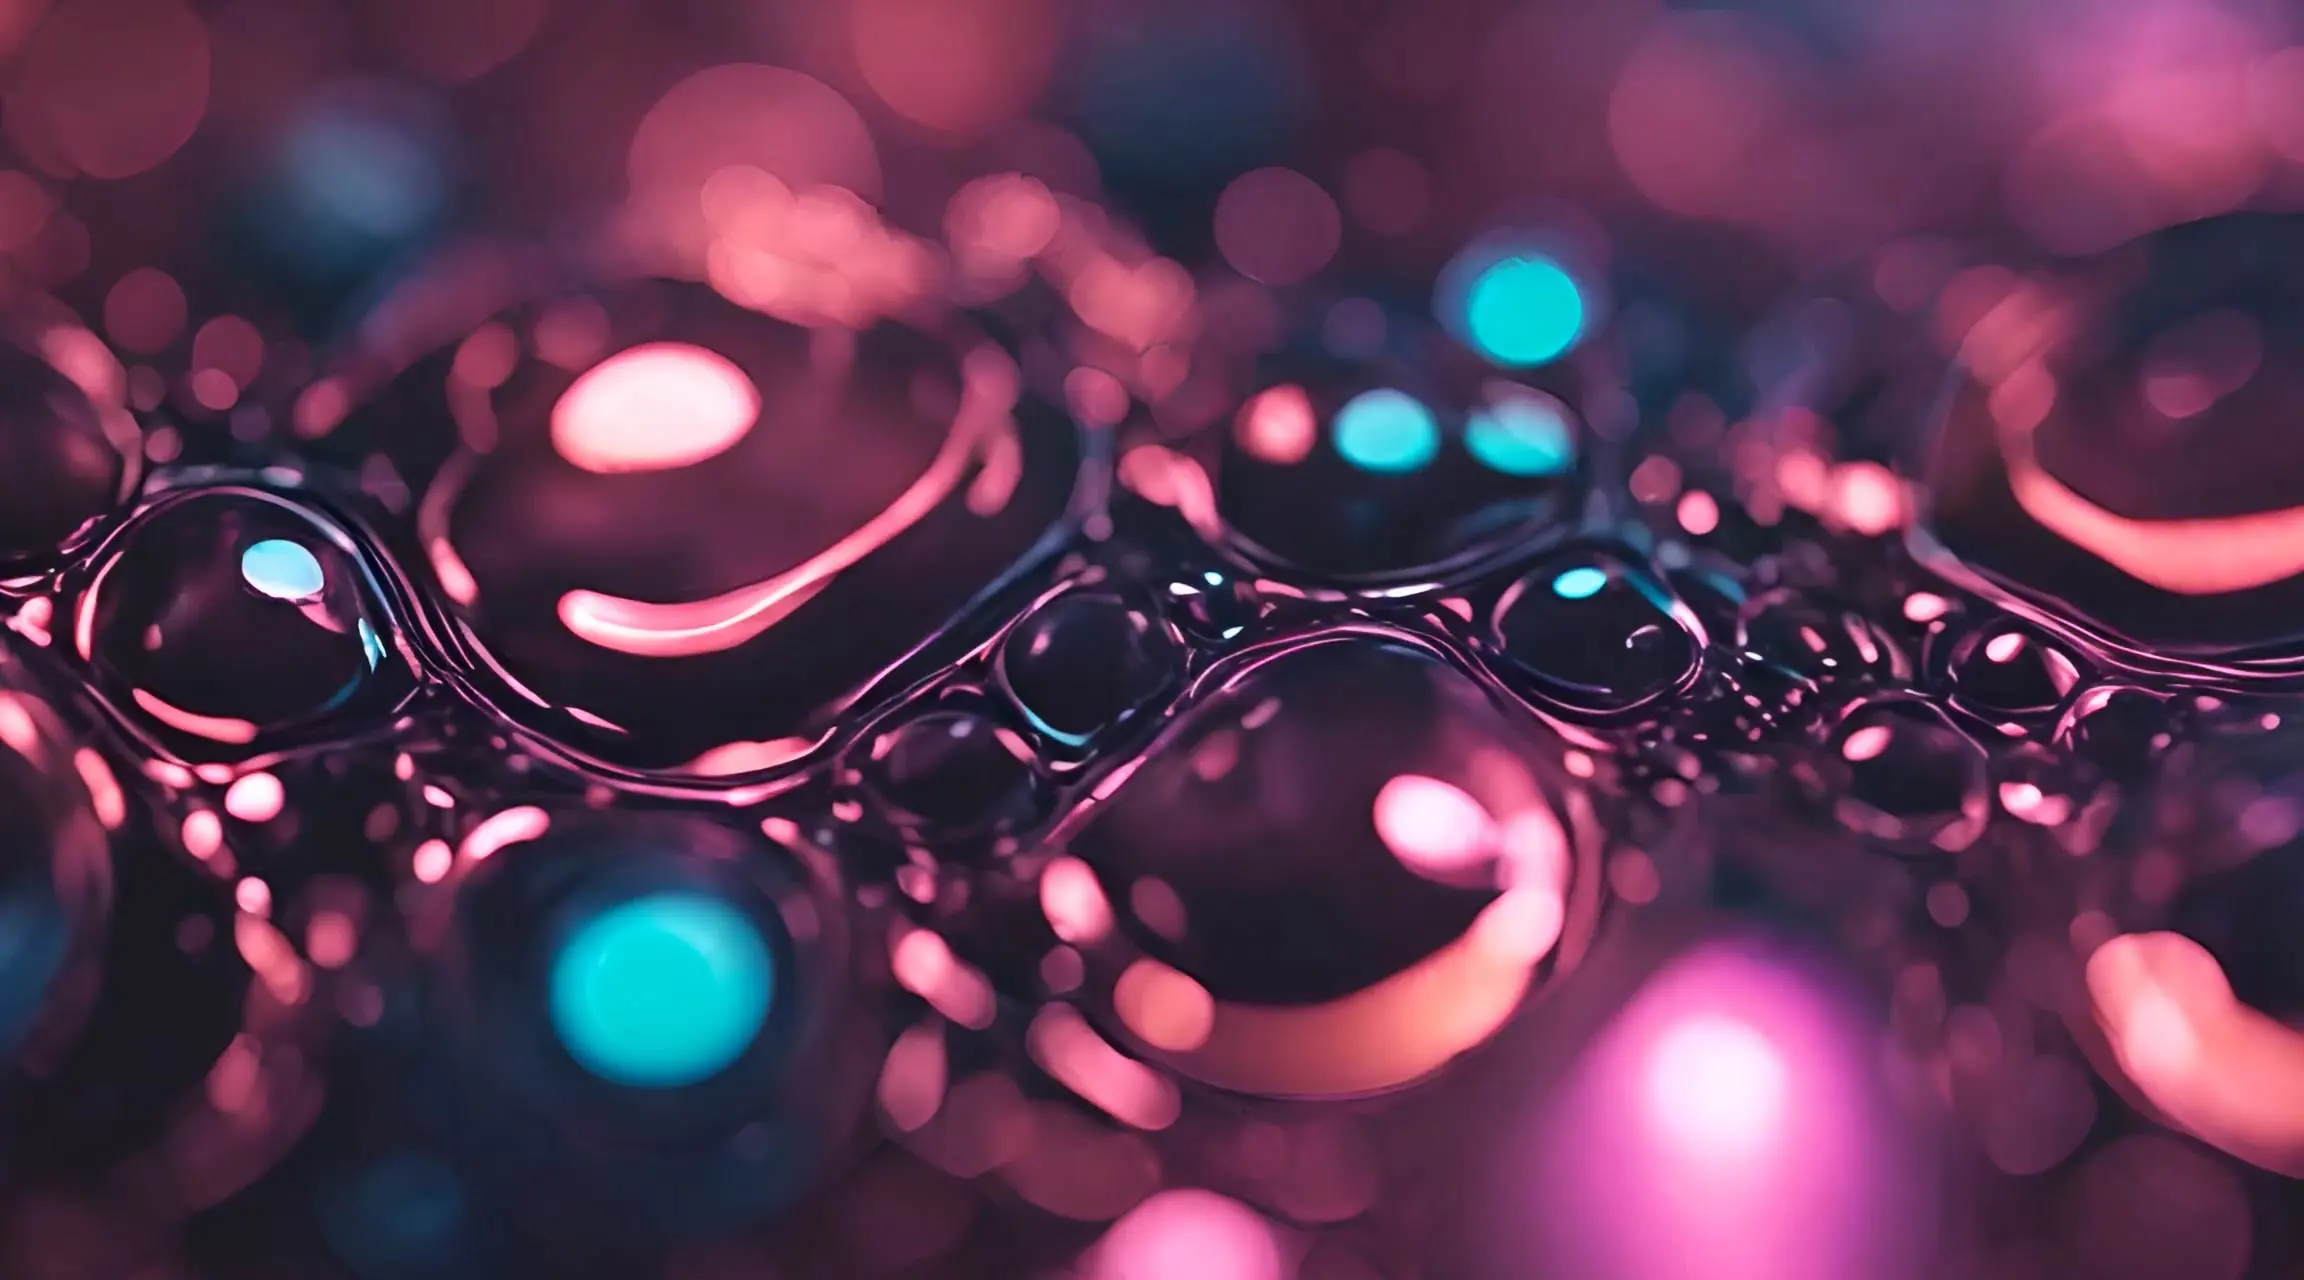 Glowing Drops Colourful Liquid Light Video